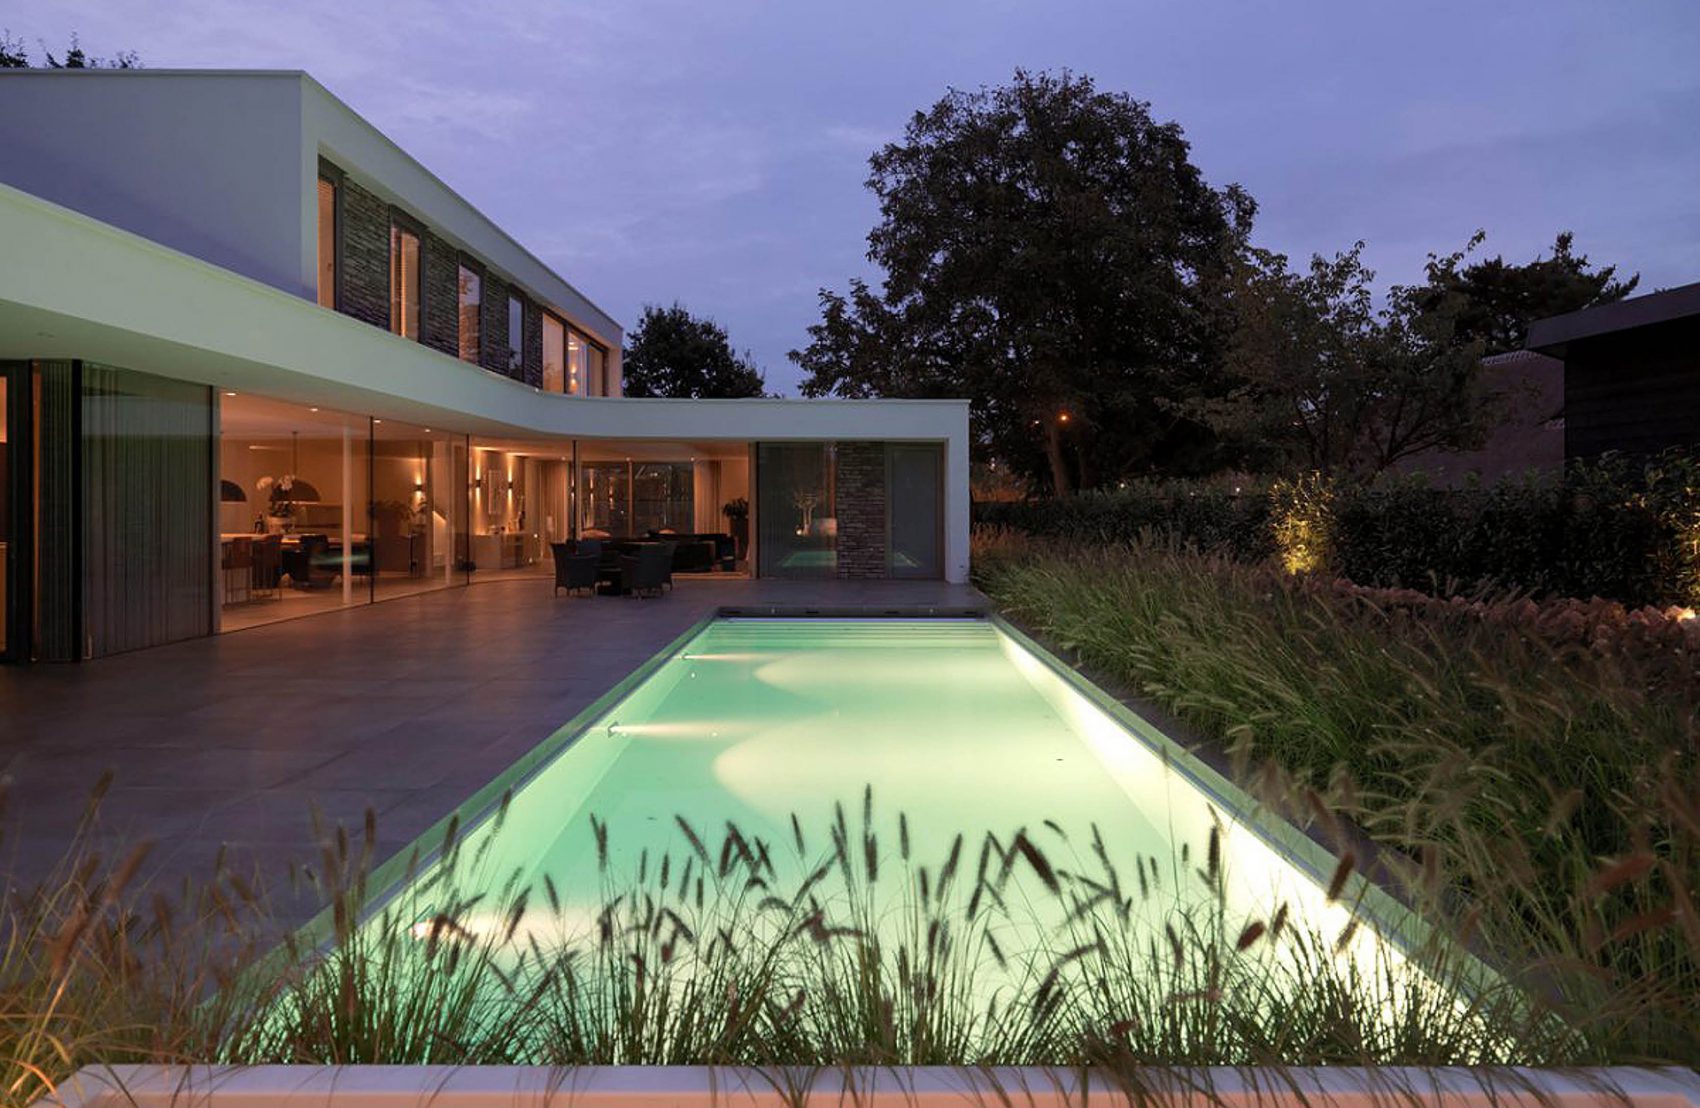 Illuminated pool for a stone-clad villa